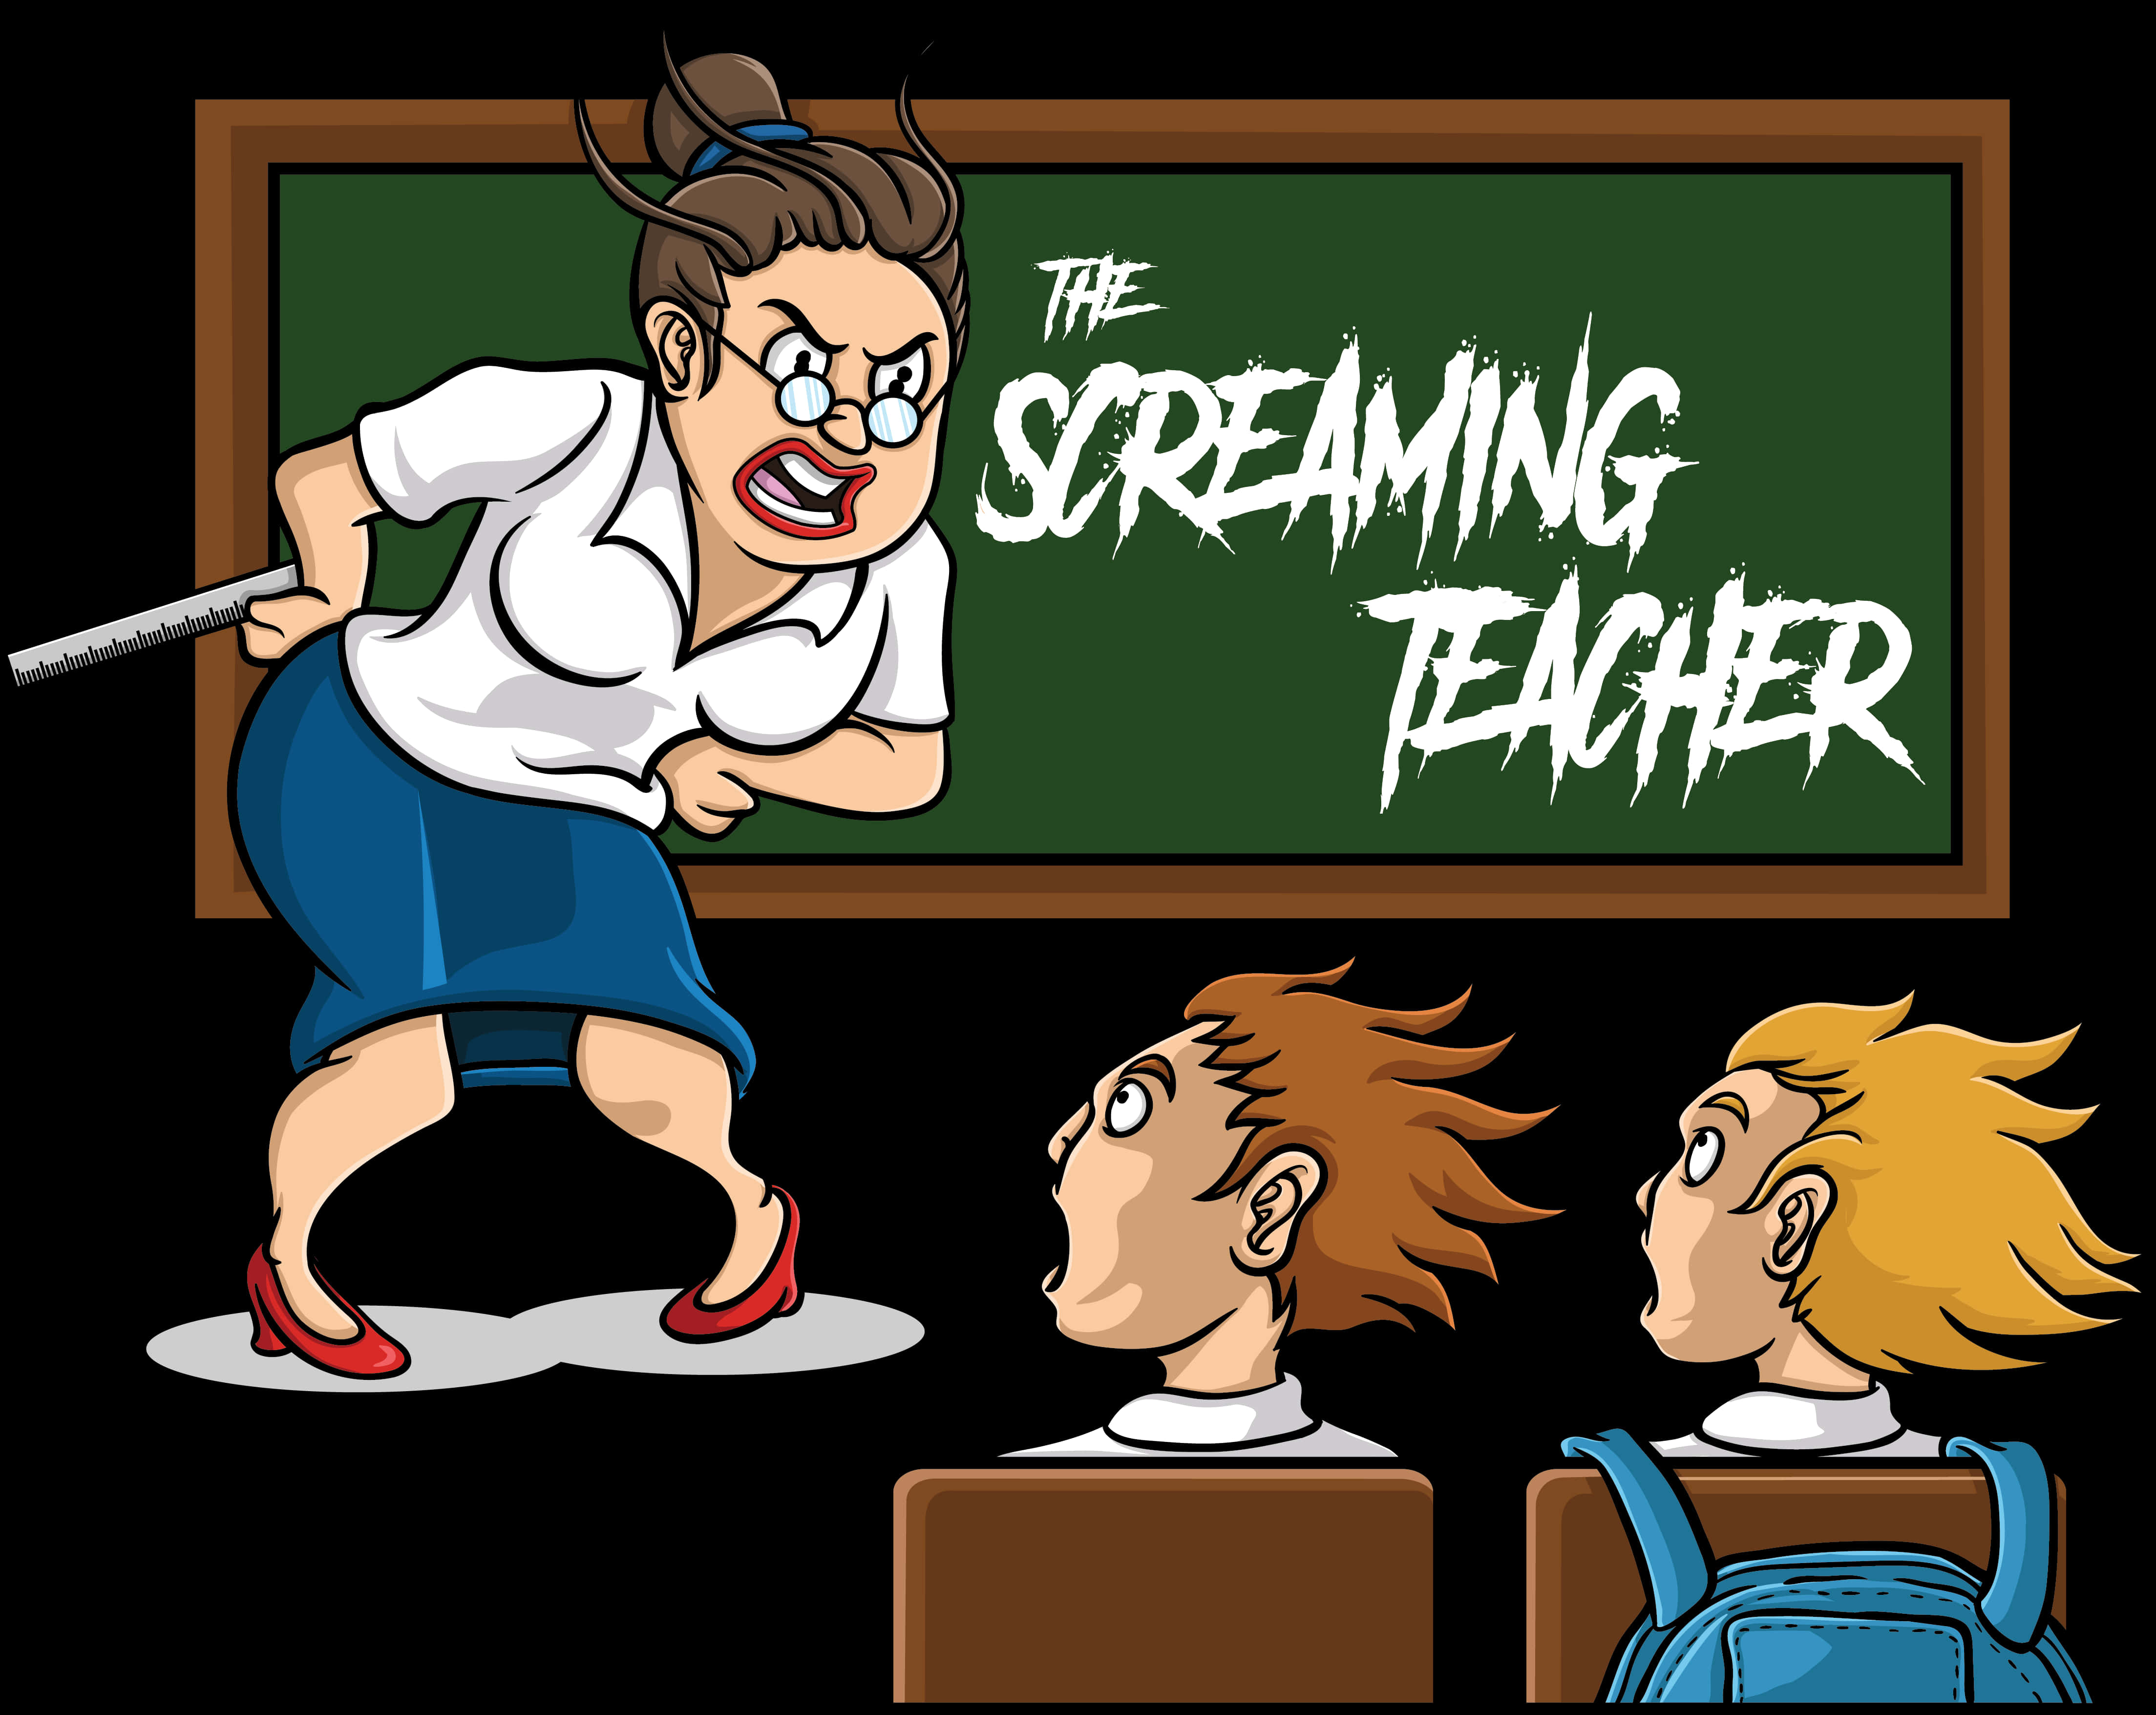 The Screaming Teacher Cartoon